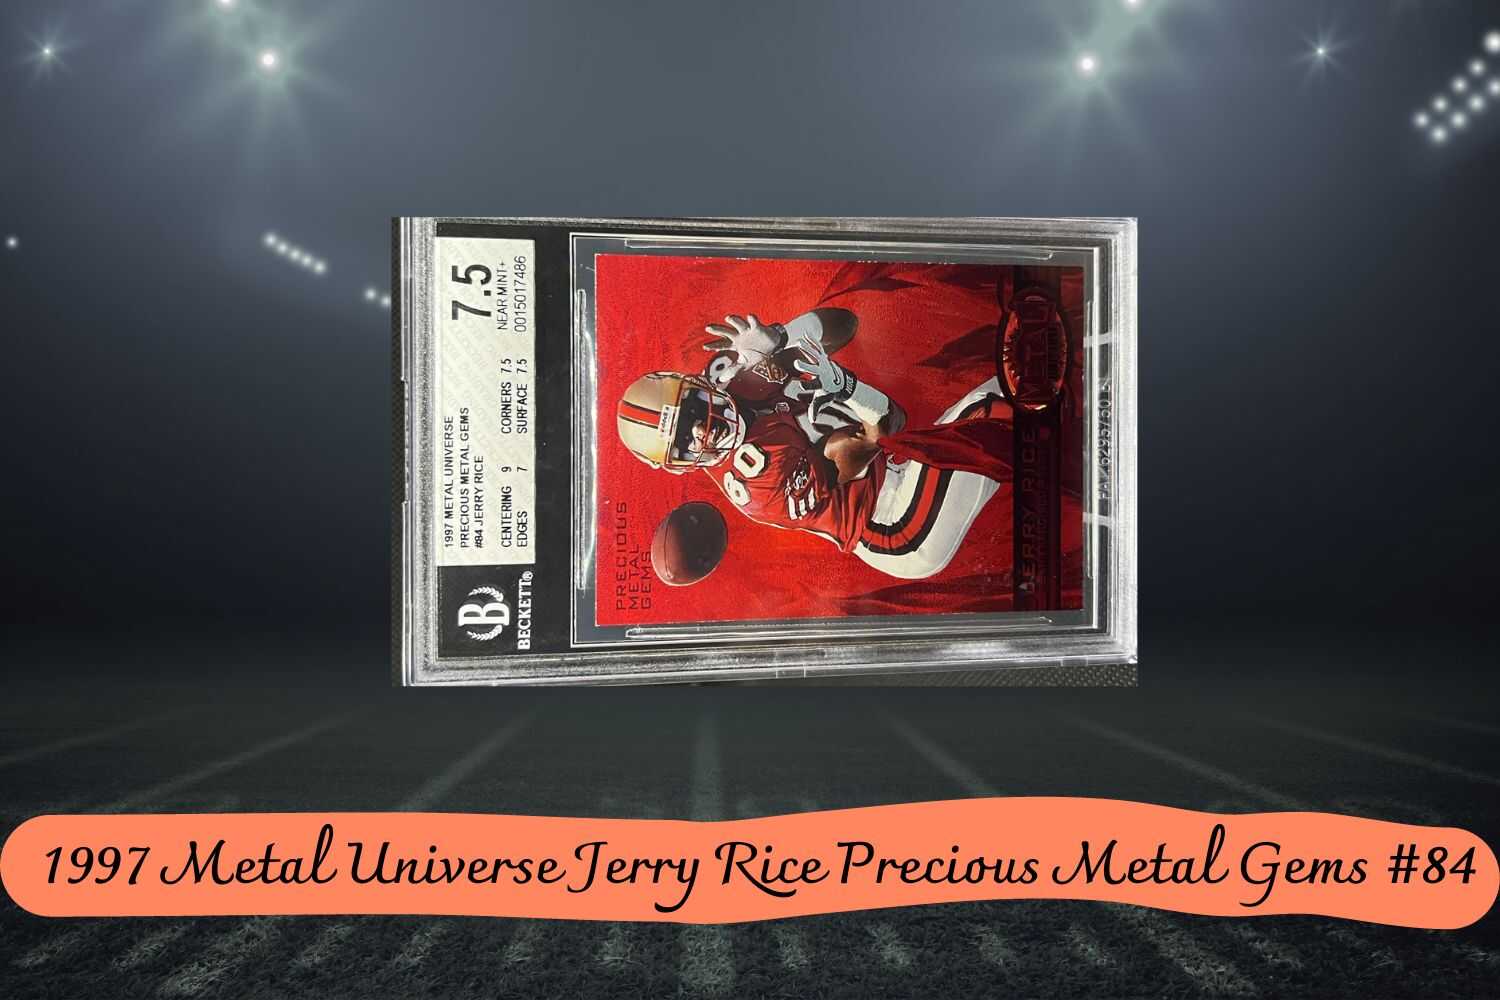 #10 1998 Metal Universe Jerry Rice Precious Metal Gems #1 - Estimate value: $6,500